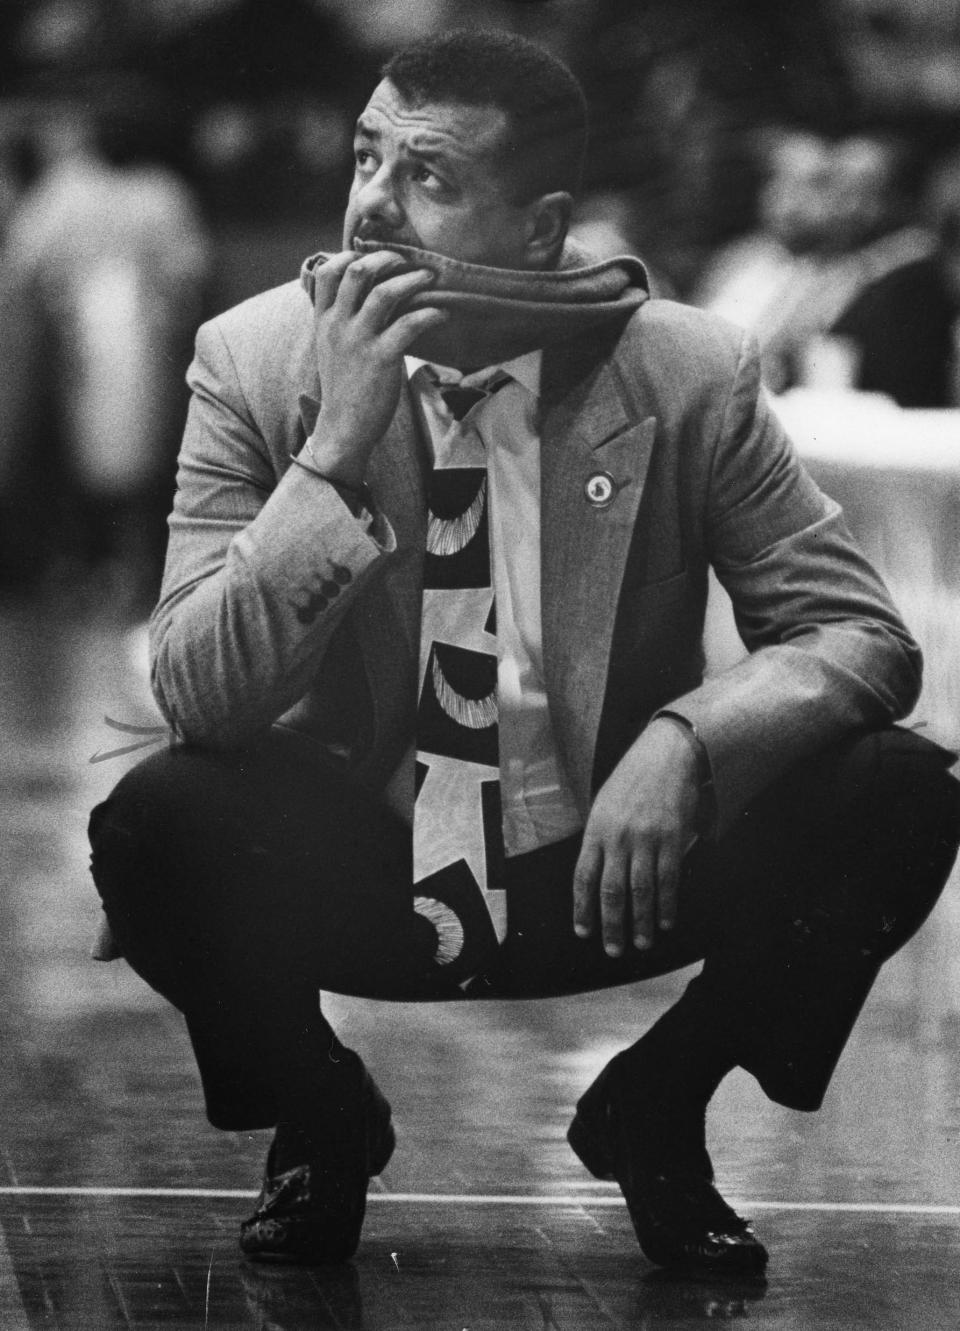 FSU Basketball coach Jeff Capel in 1991.